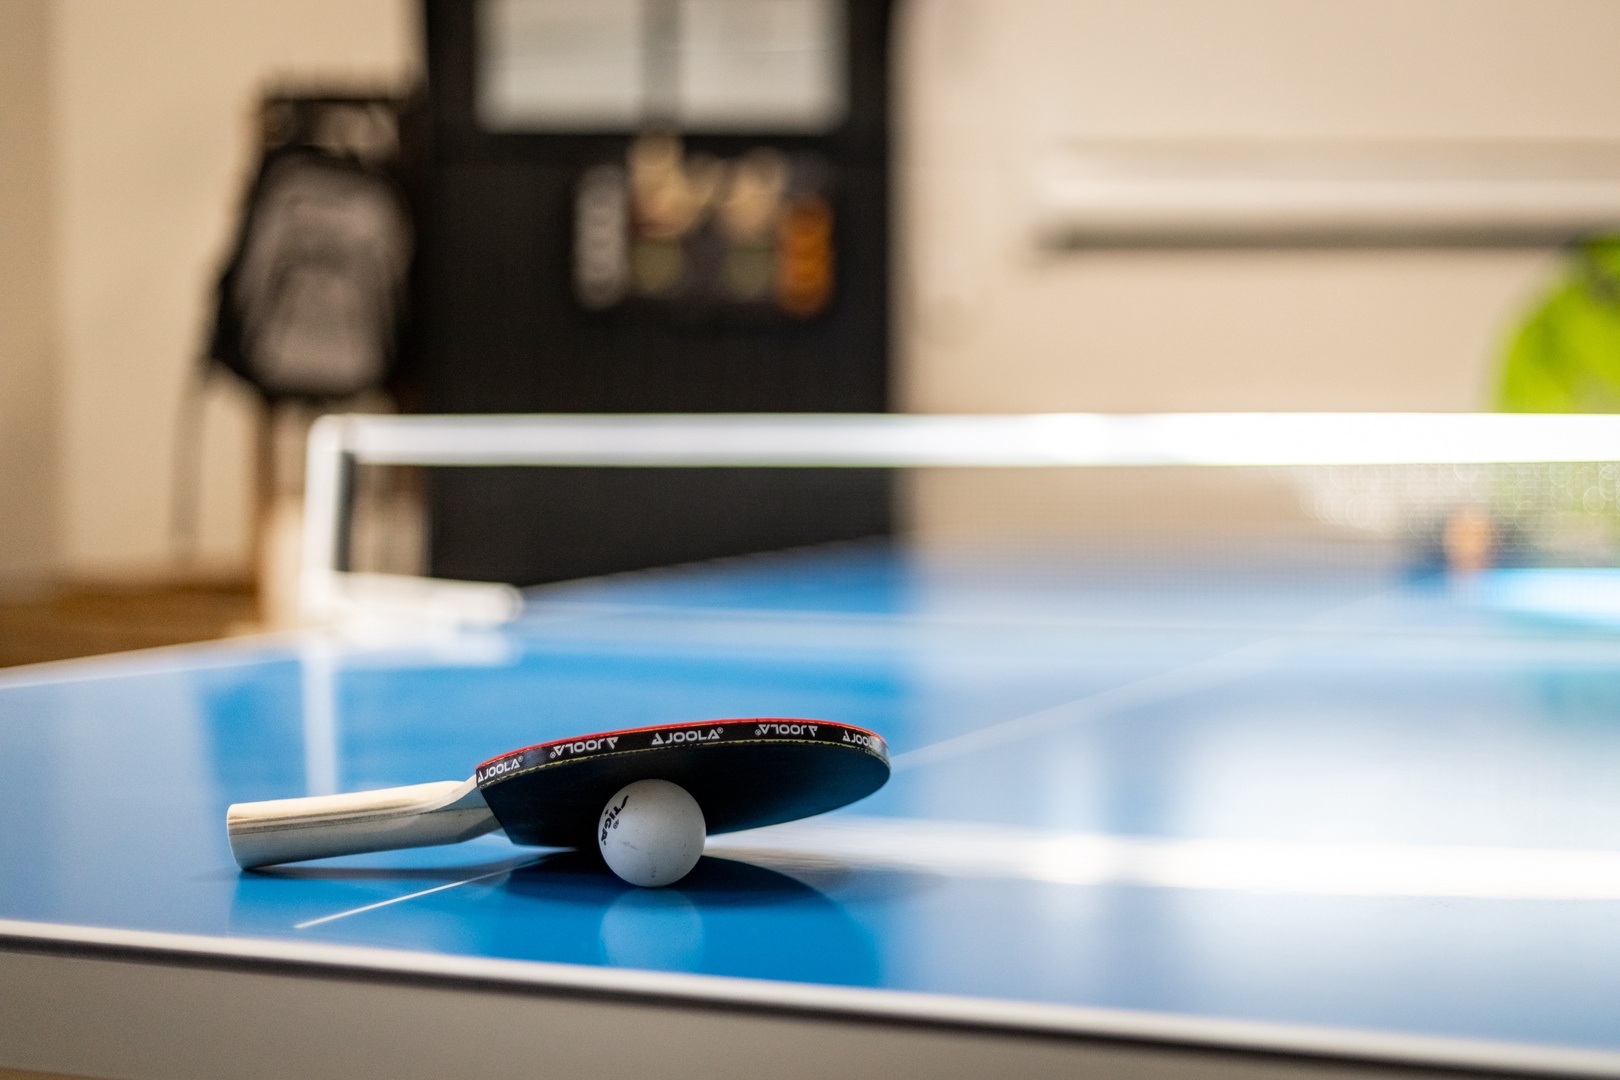 Garage ping pong table